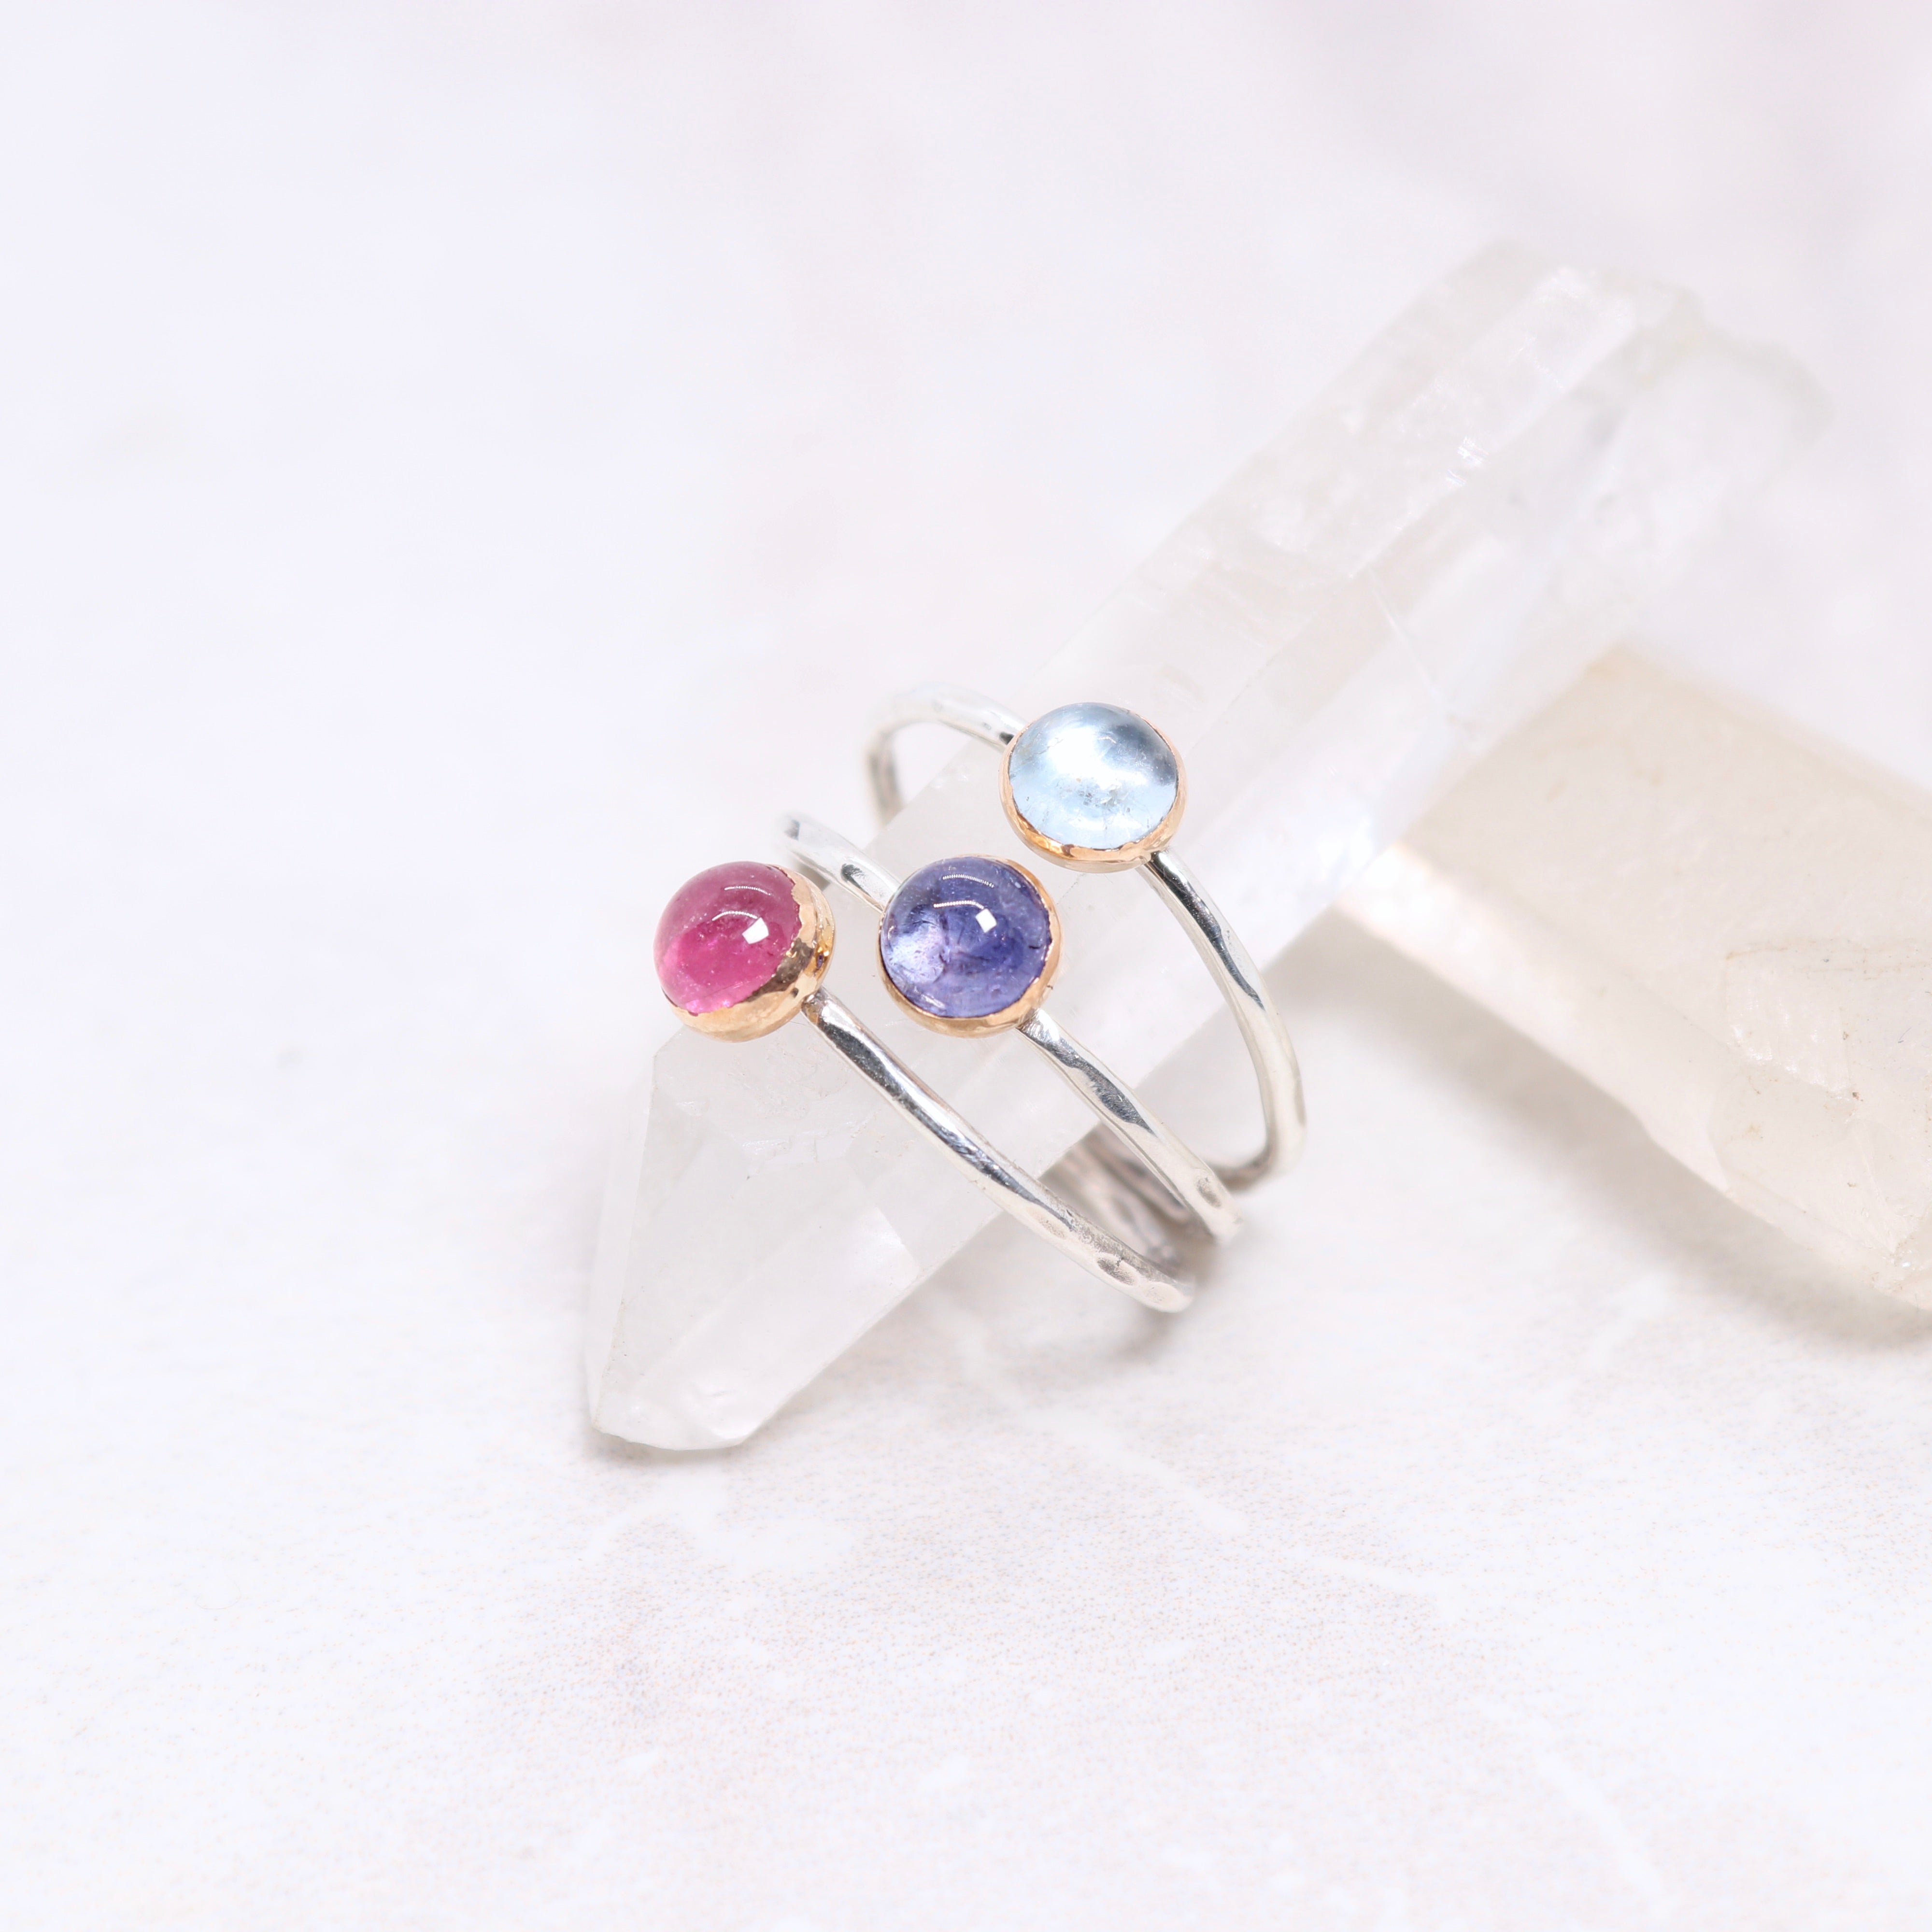 Pink tourmaline, tanzanite, and aquamarine boho mixed metal gemstone rings